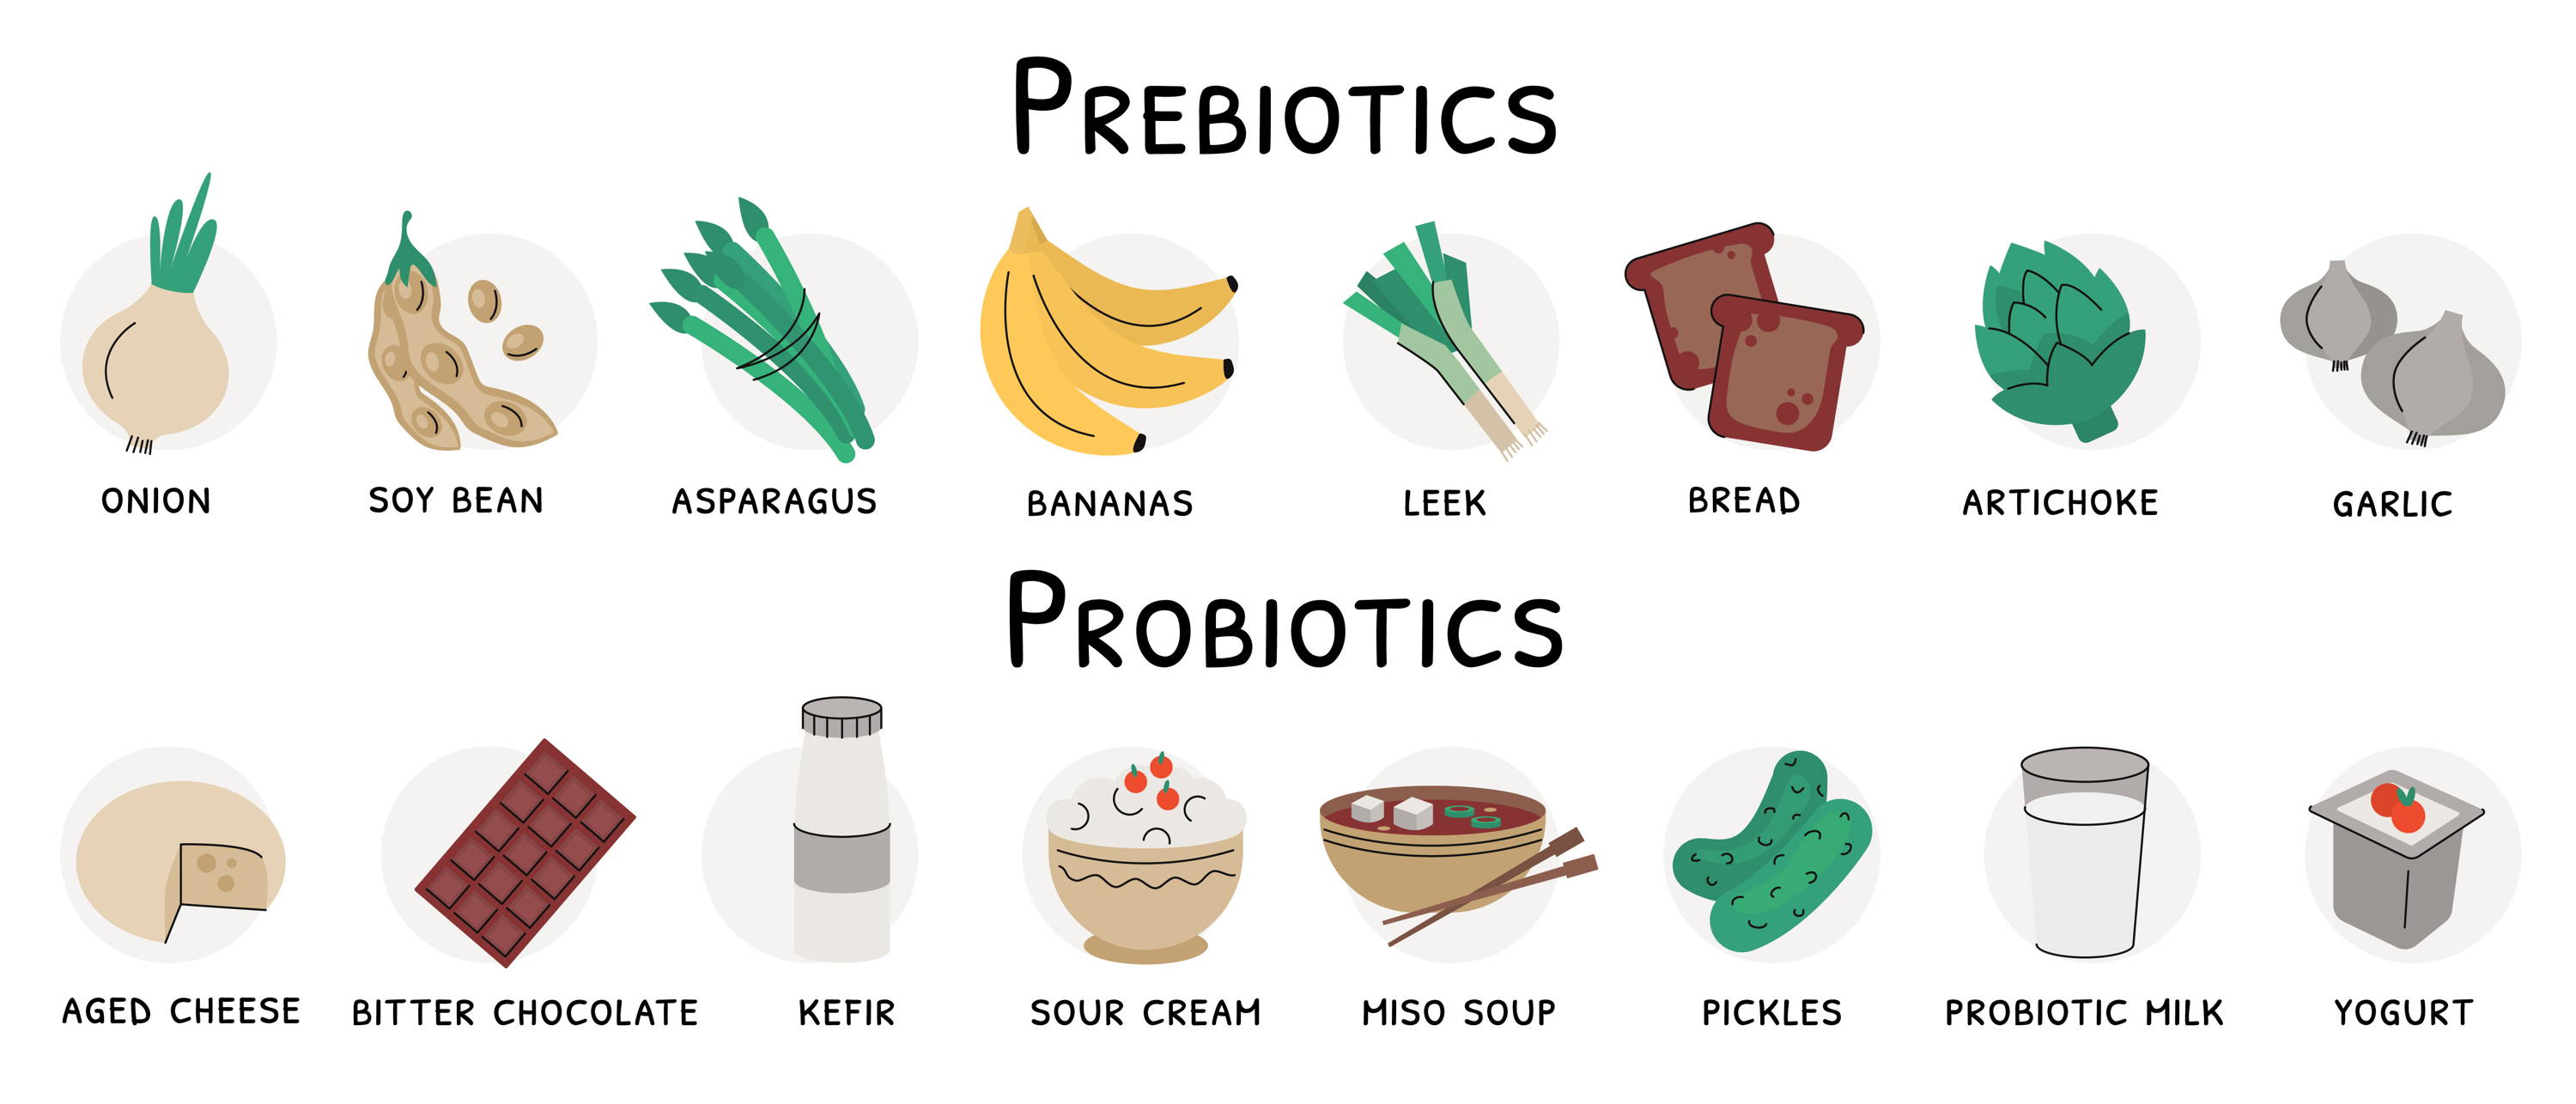 Prebiotic foods and functional foods